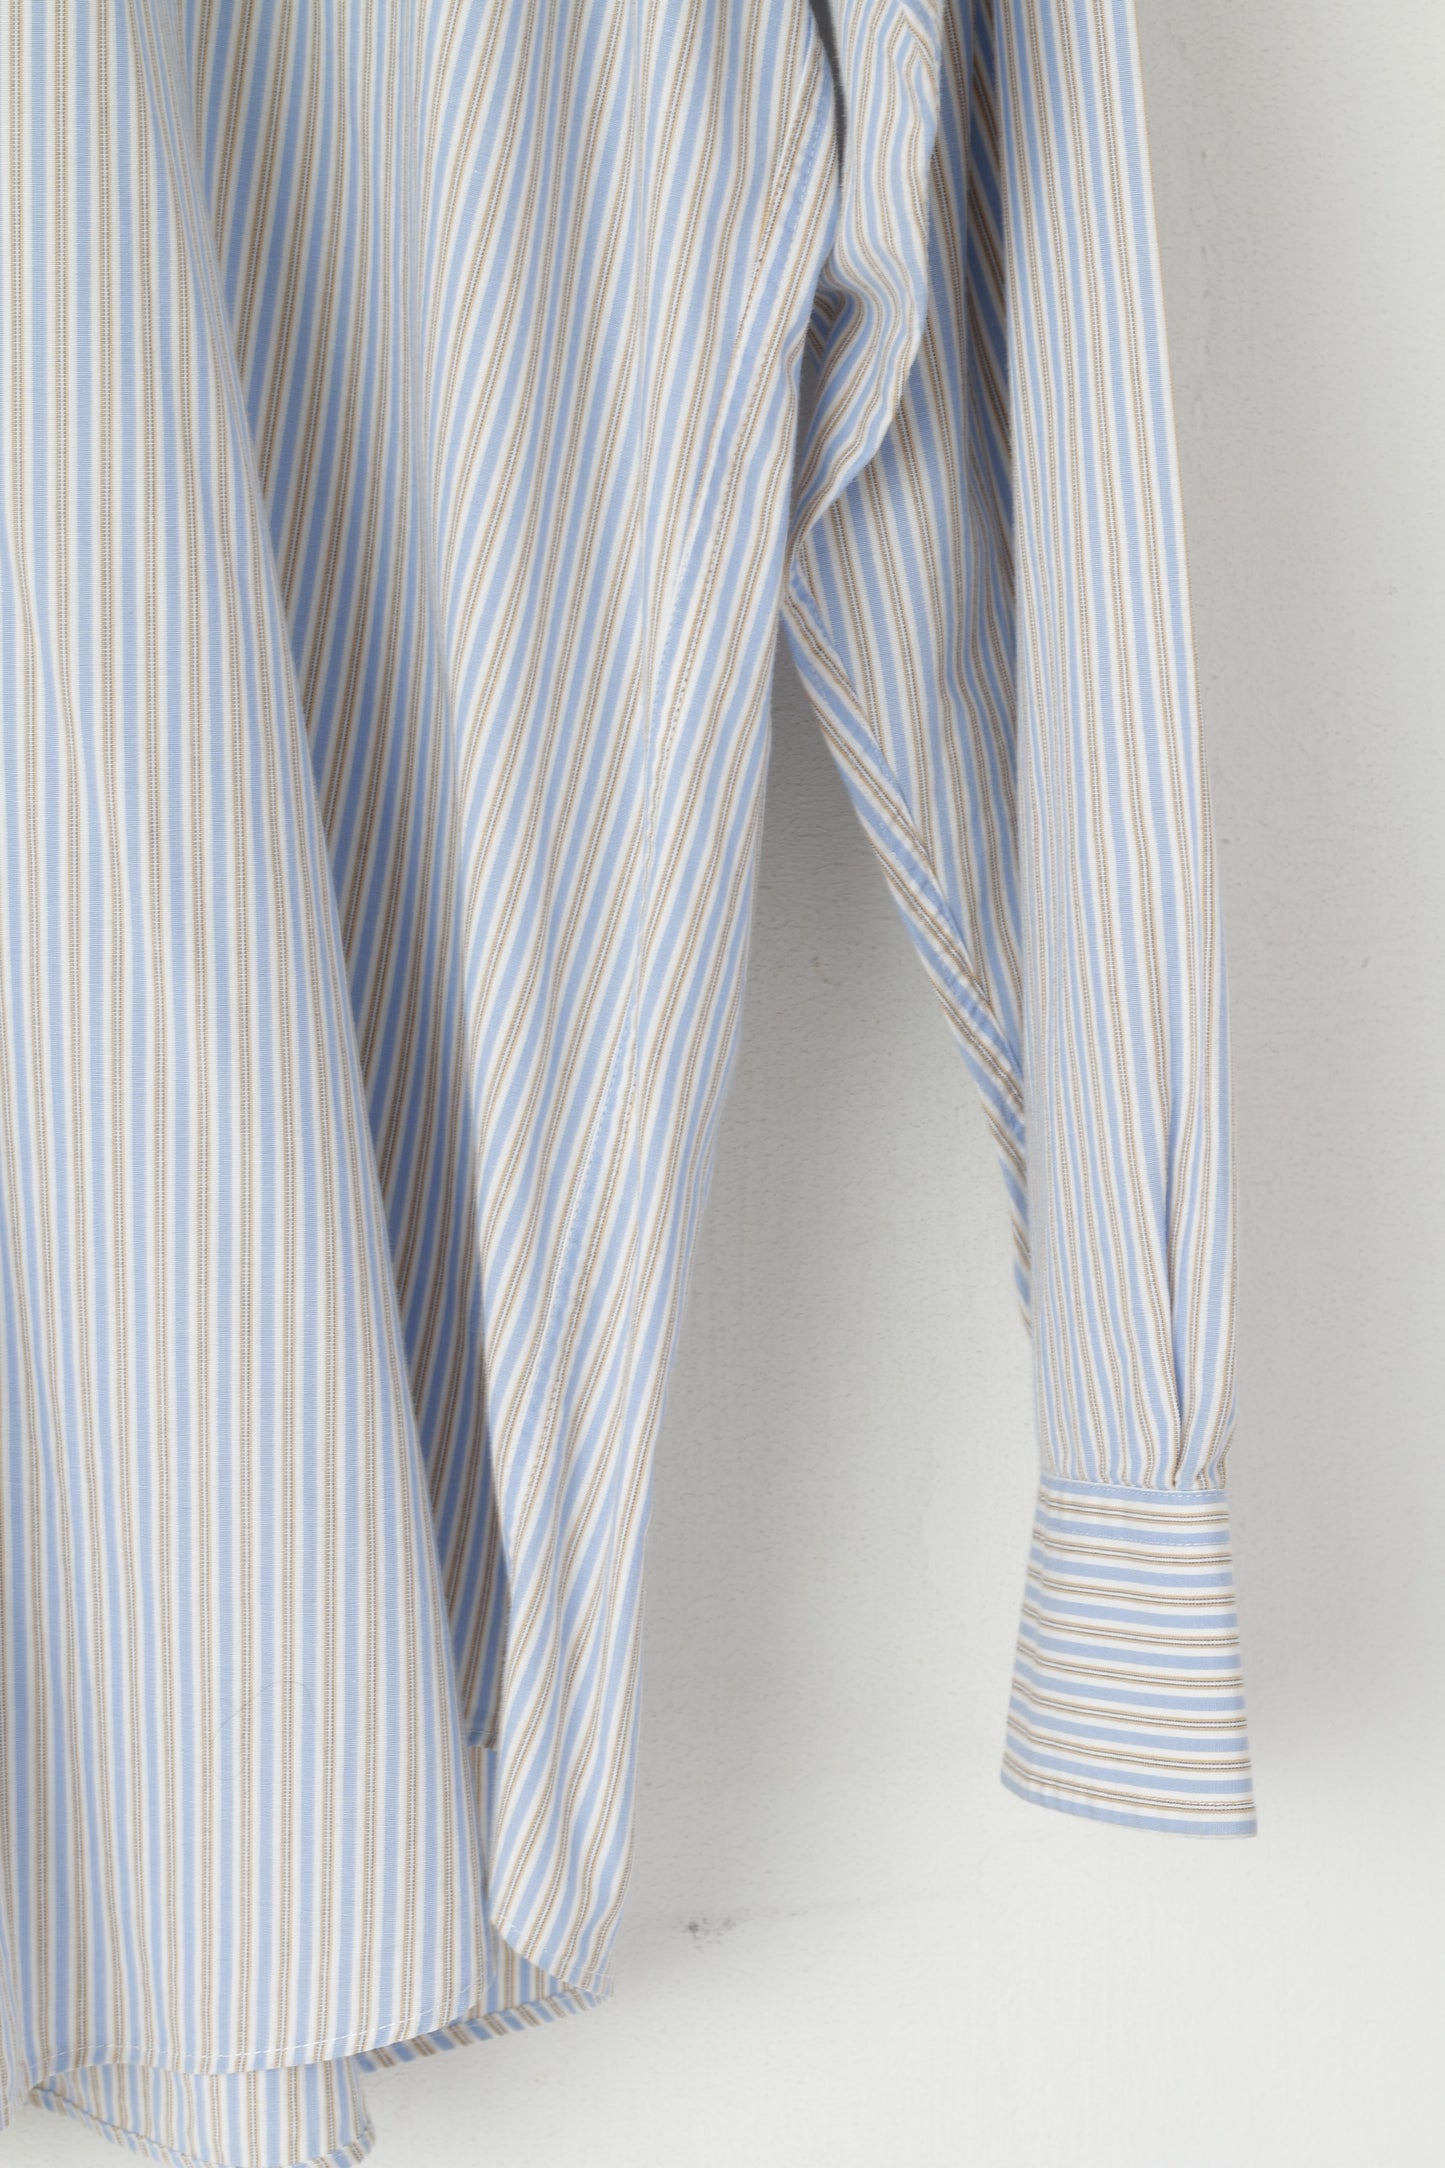 Nautica Men 34/35 16.5 XXL Casual Shirt Blue Striped Cotton Classic Fit Long Sleeve Top